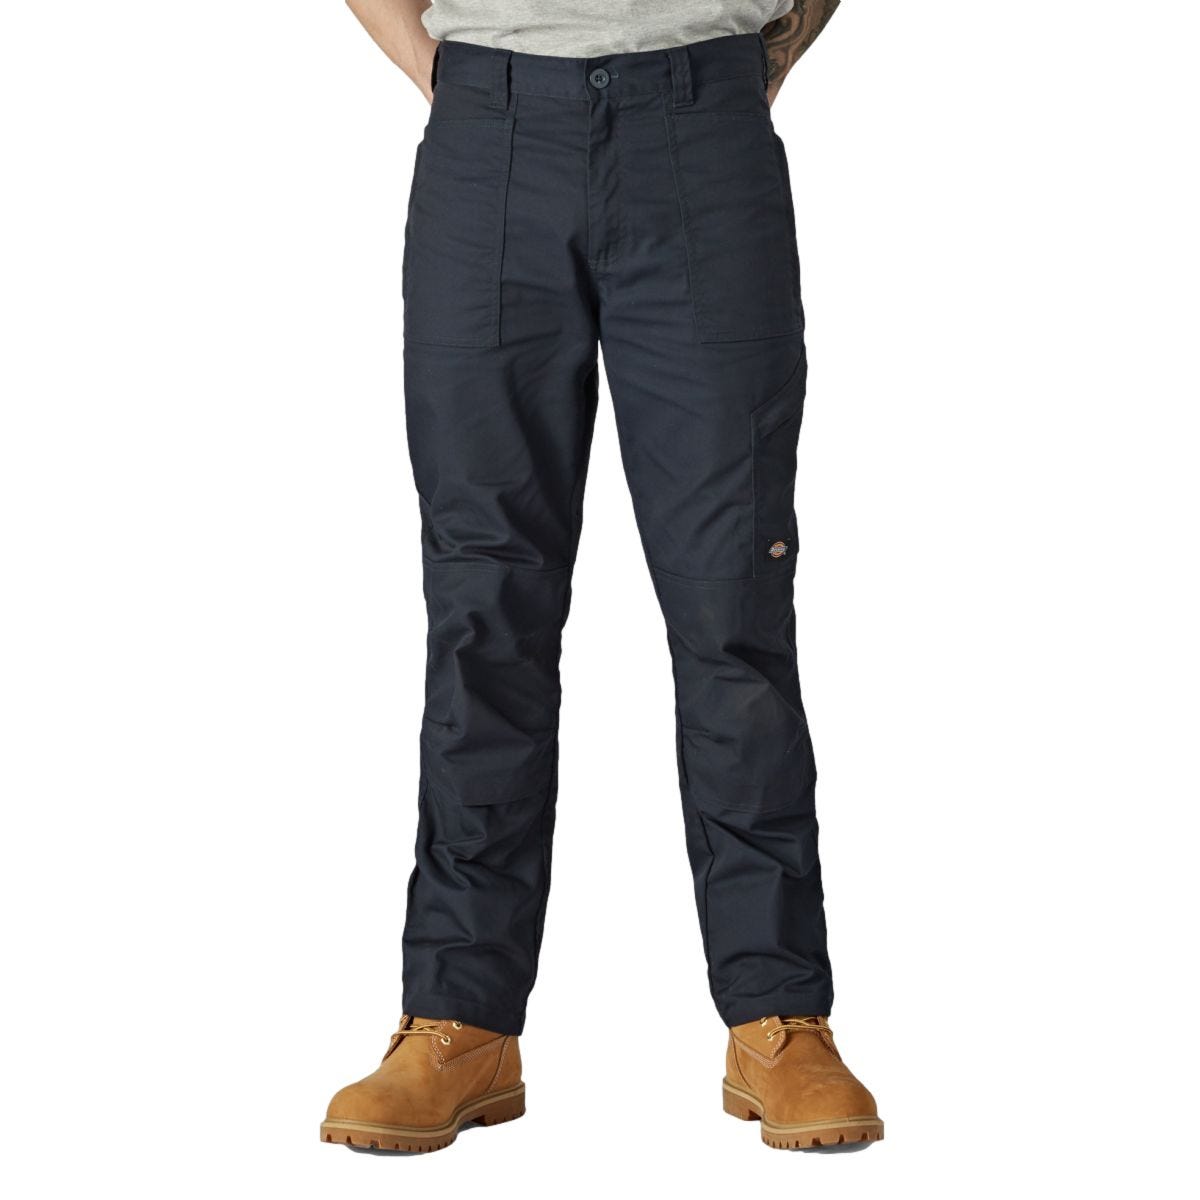 Pantalon de travail Action Flex bleu marine - Dickies - Taille 38 0